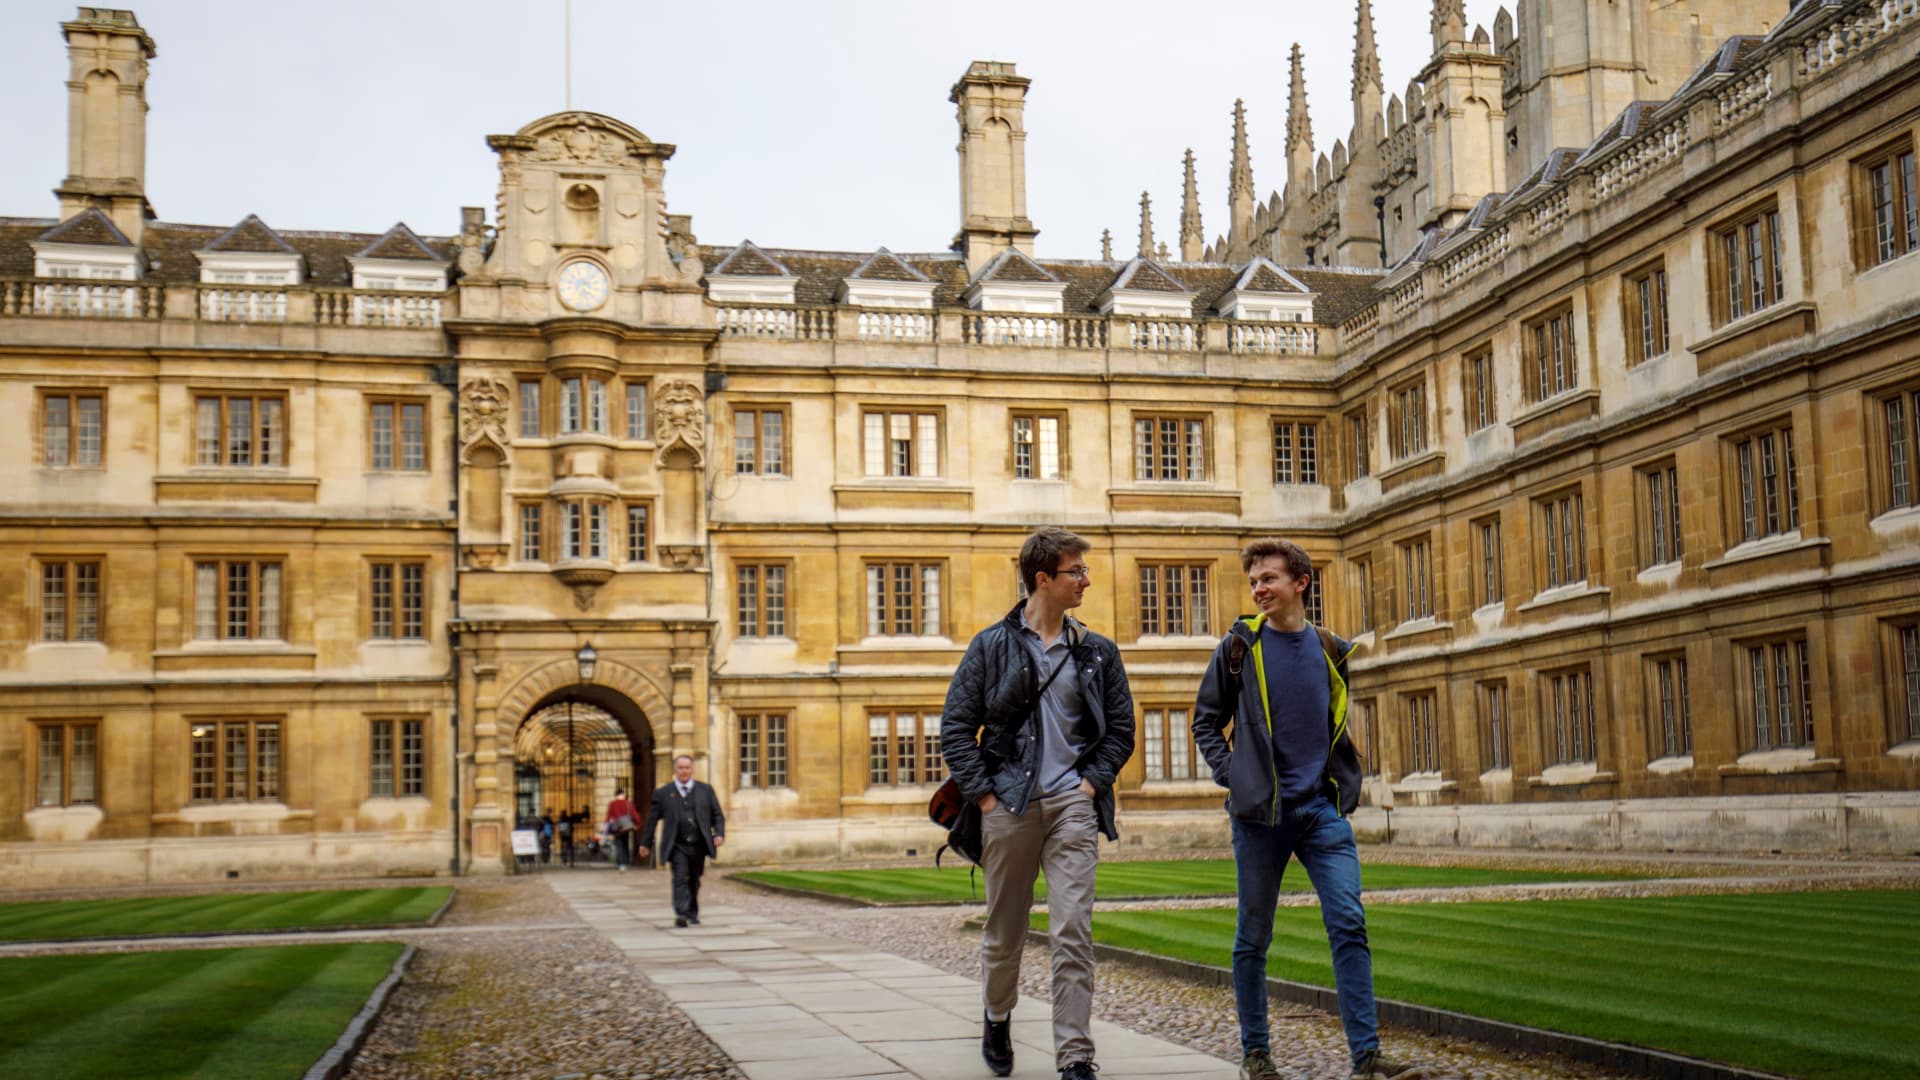 Students walk through Cambridge University in Cambridge, east of England, on March 14, 2018.